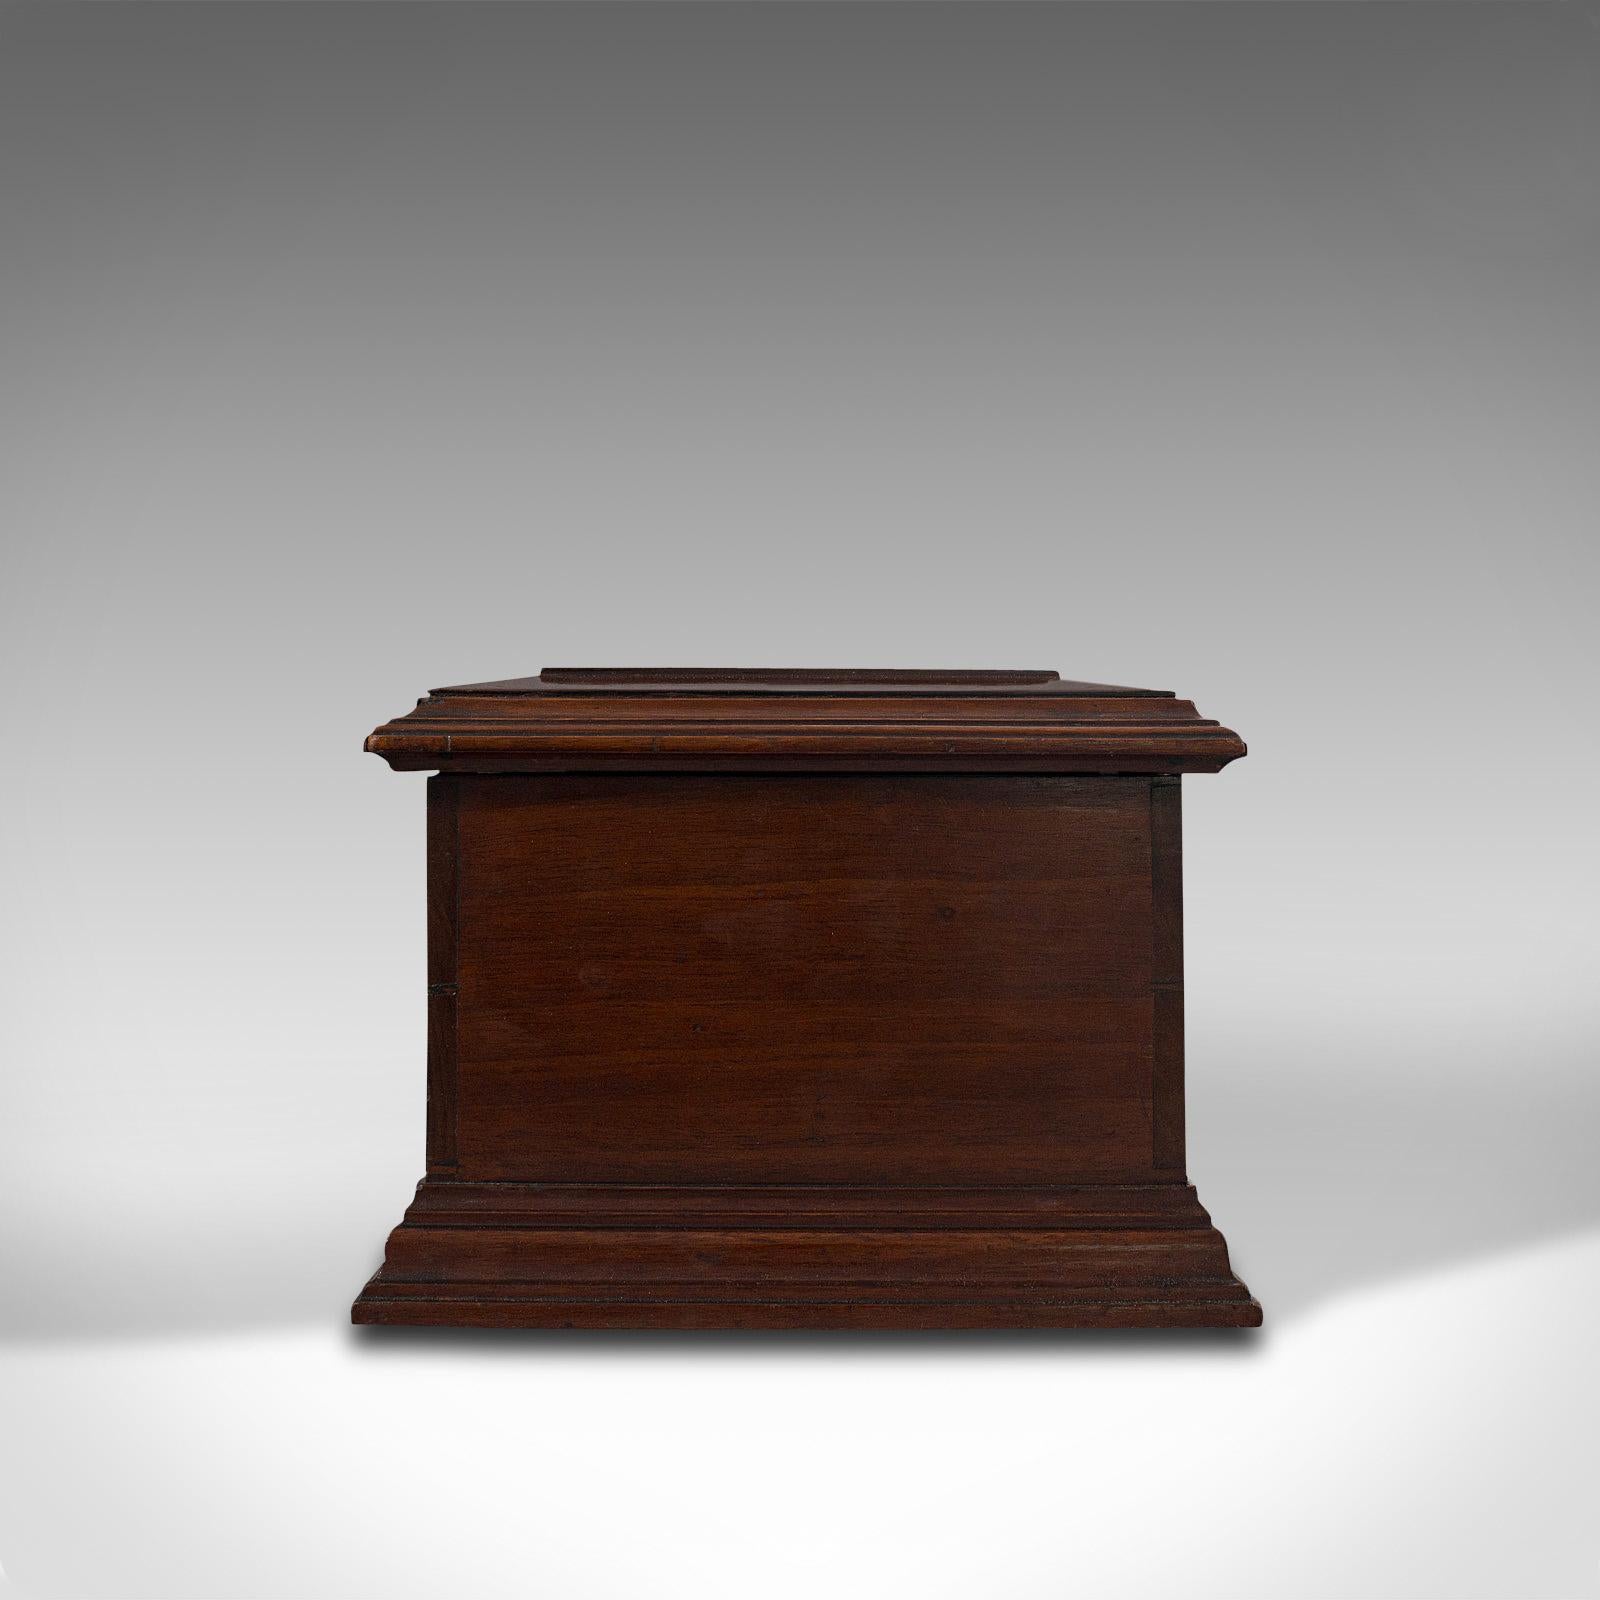 19th Century Small Antique Document Box, English, Walnut, Desk, Pen, Sarcophagus, Victorian